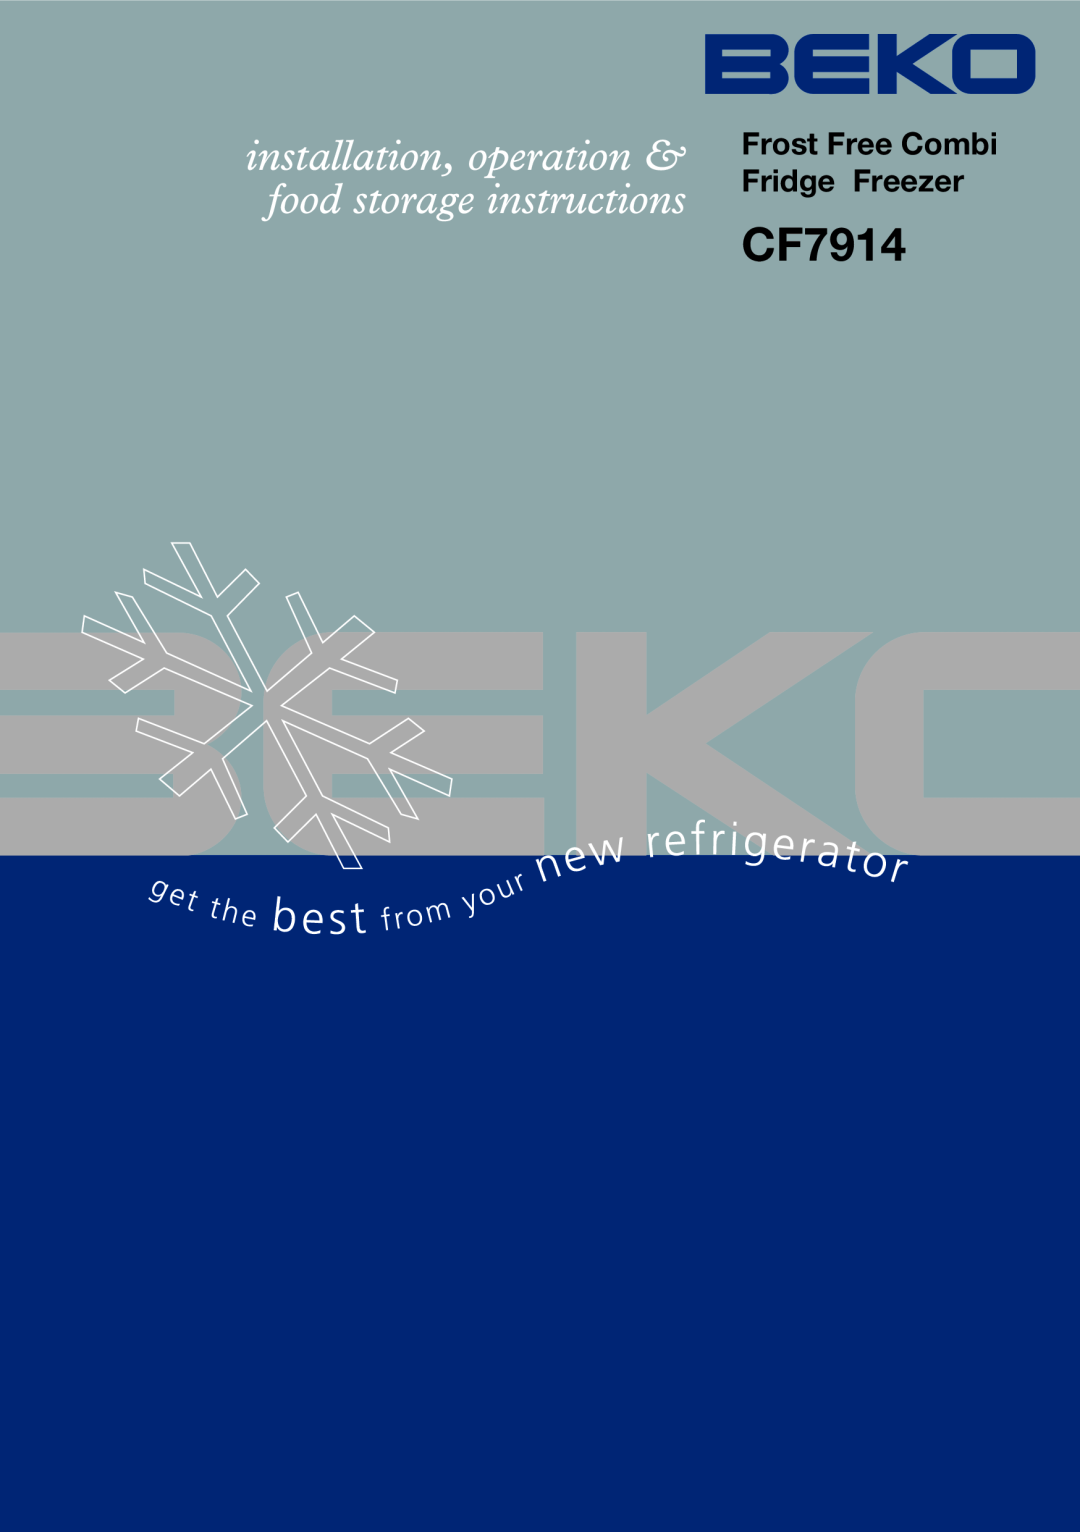 Beko CF7914 manual Frost Free Combi Fridge Freezer 